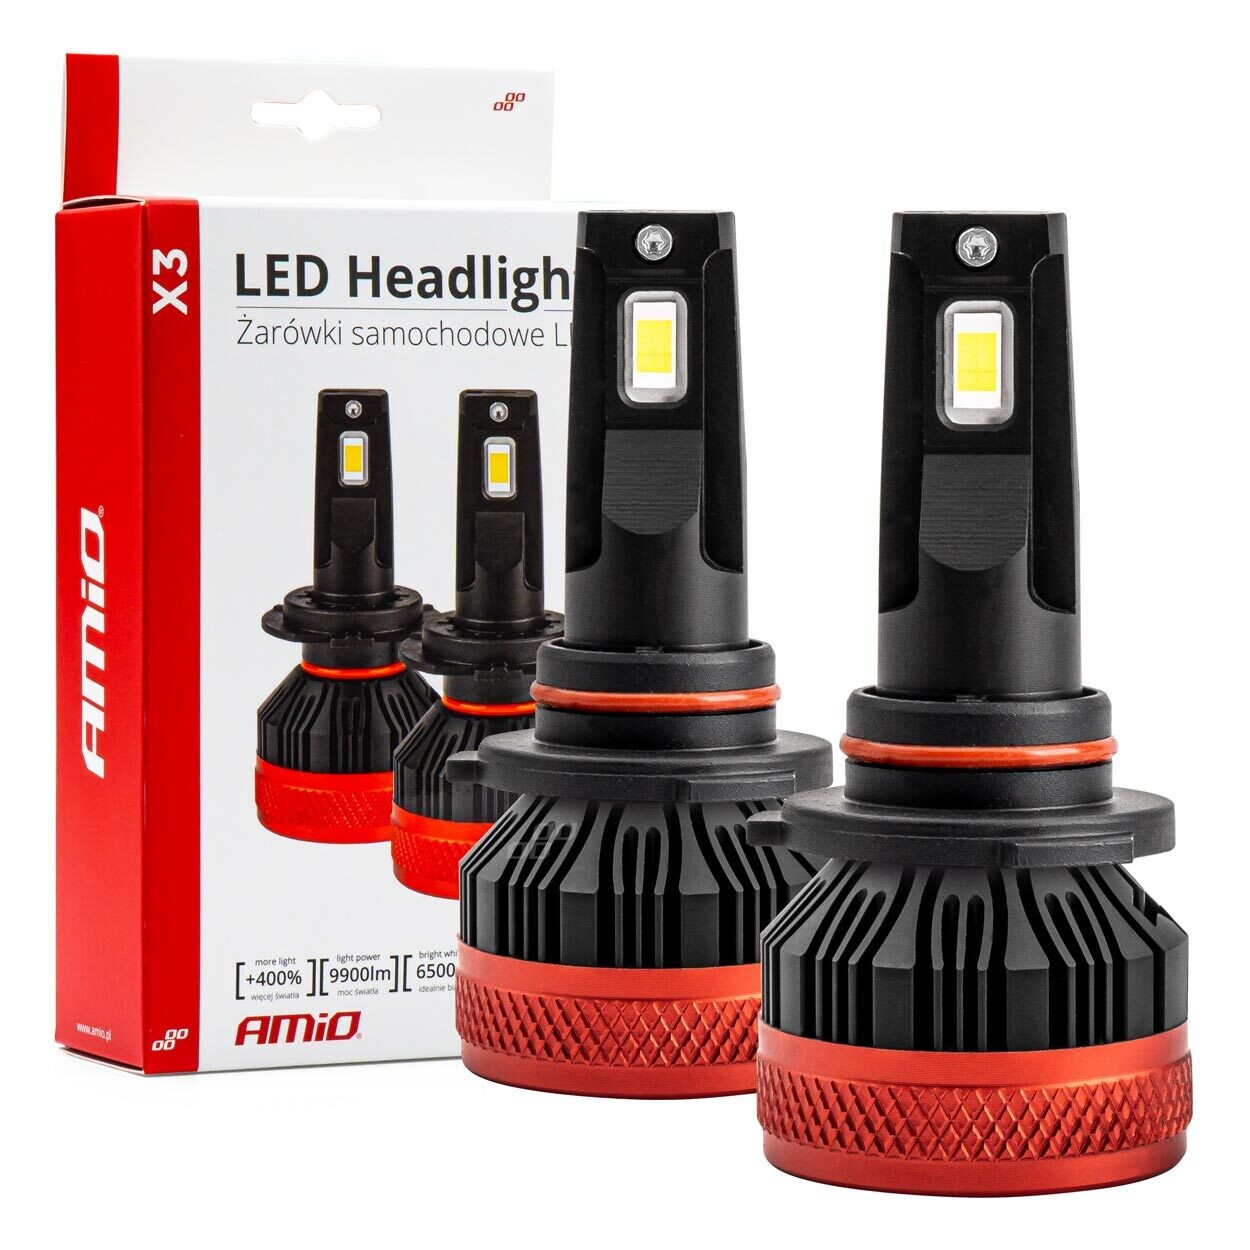 LED Headlight HB4 9006 X3 Series AMiO